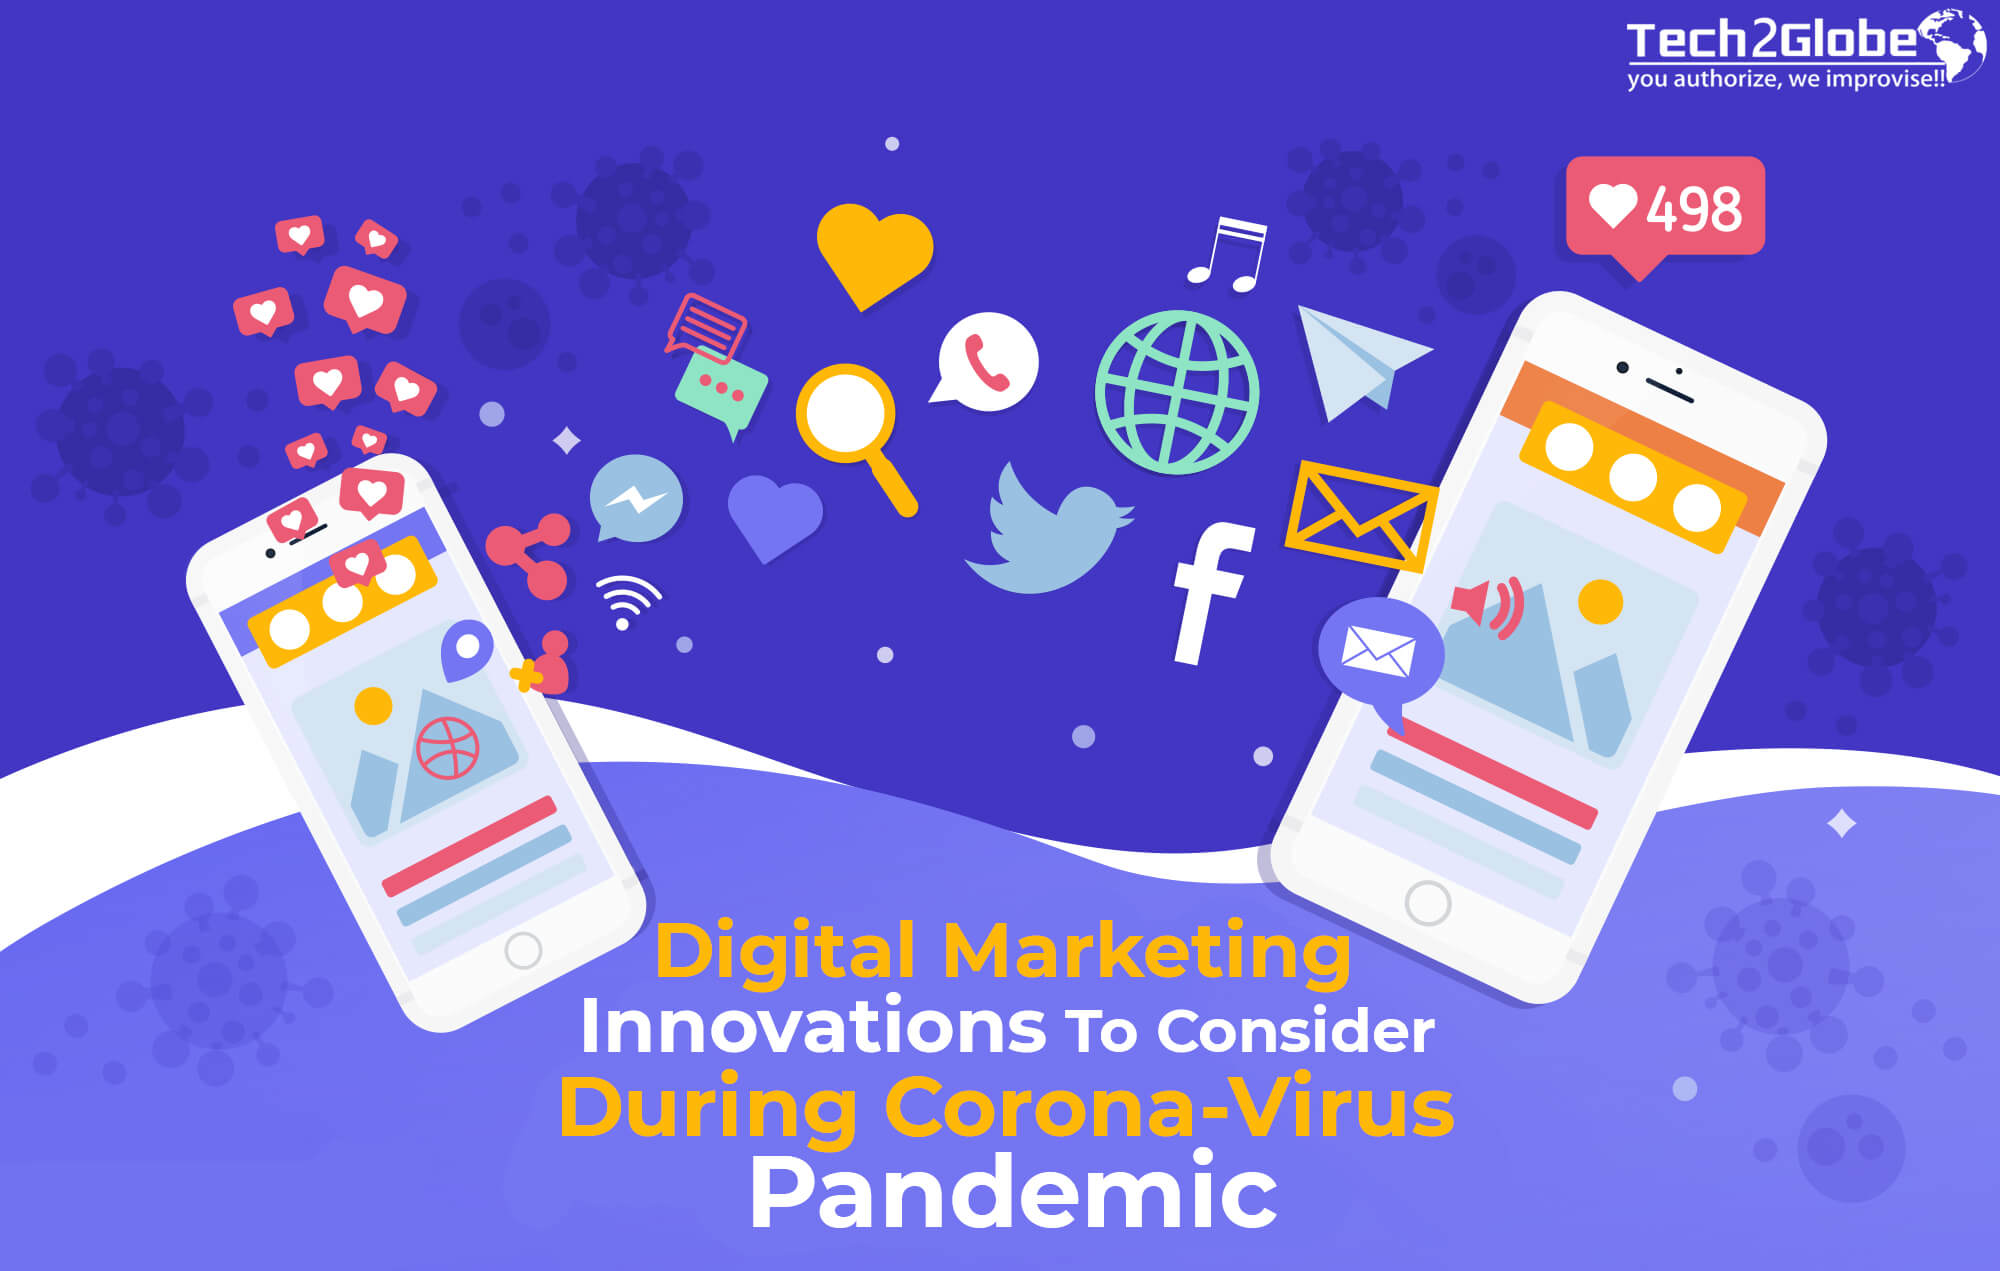 Digital marketing services during coronavirus pandemic, COVID-19, digital marketing agency